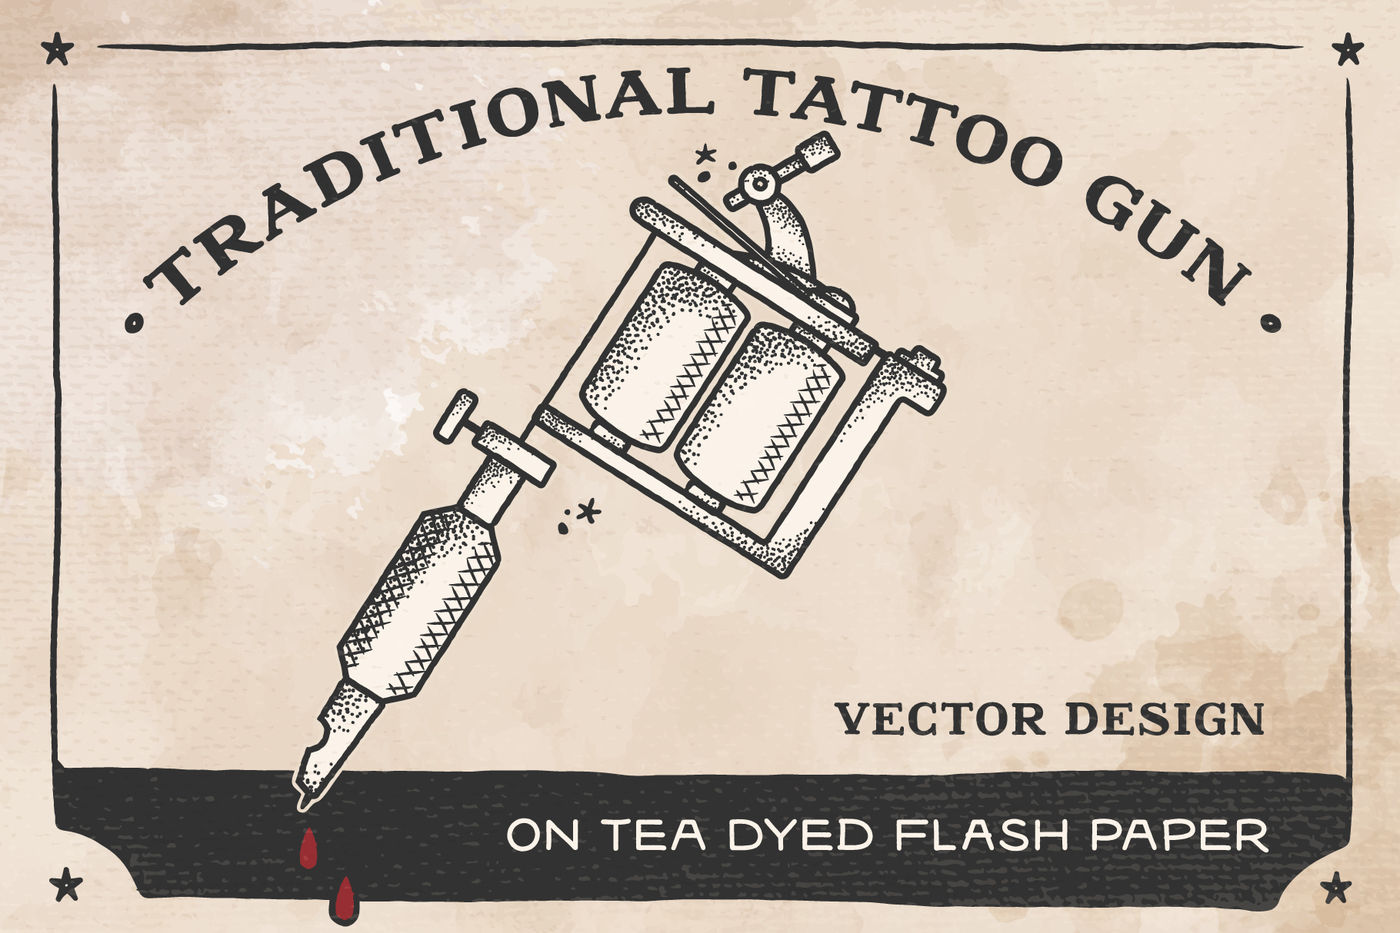 58 Most Amazing Pistol Tattoos  Designs